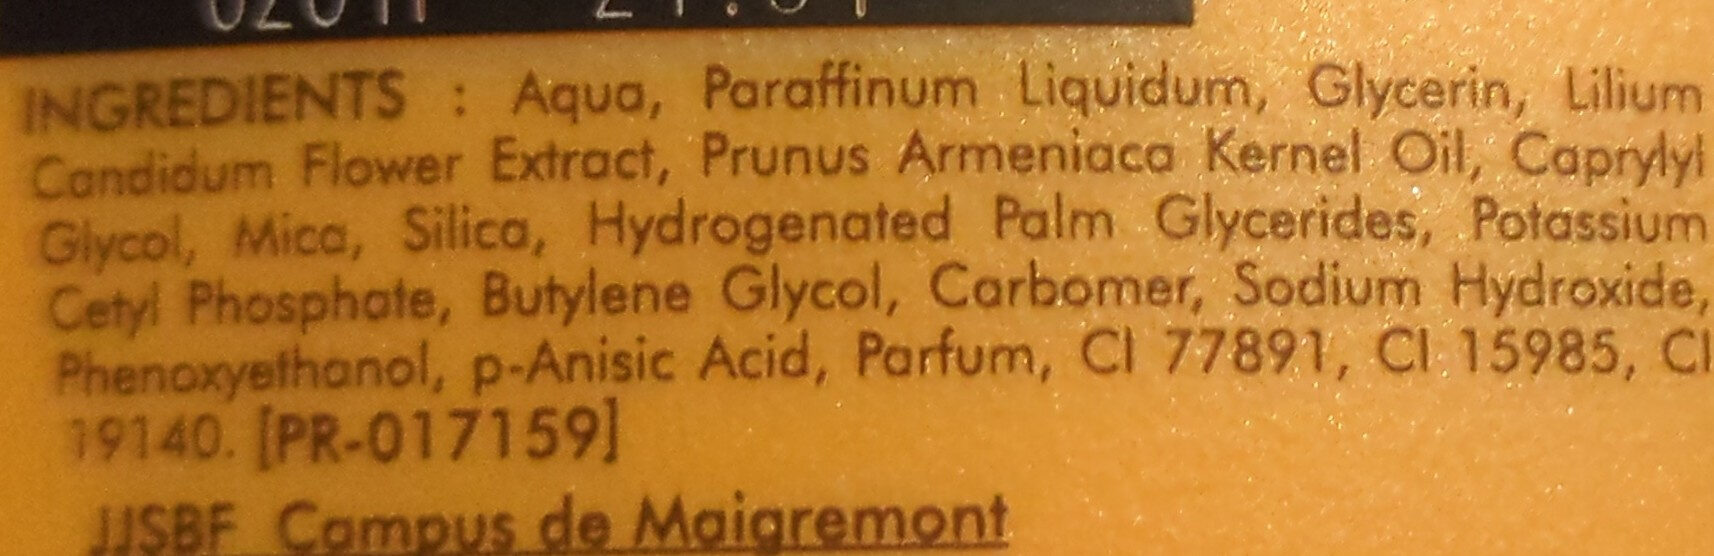 Lait soin hydratant sublimant - Inhaltsstoffe - fr